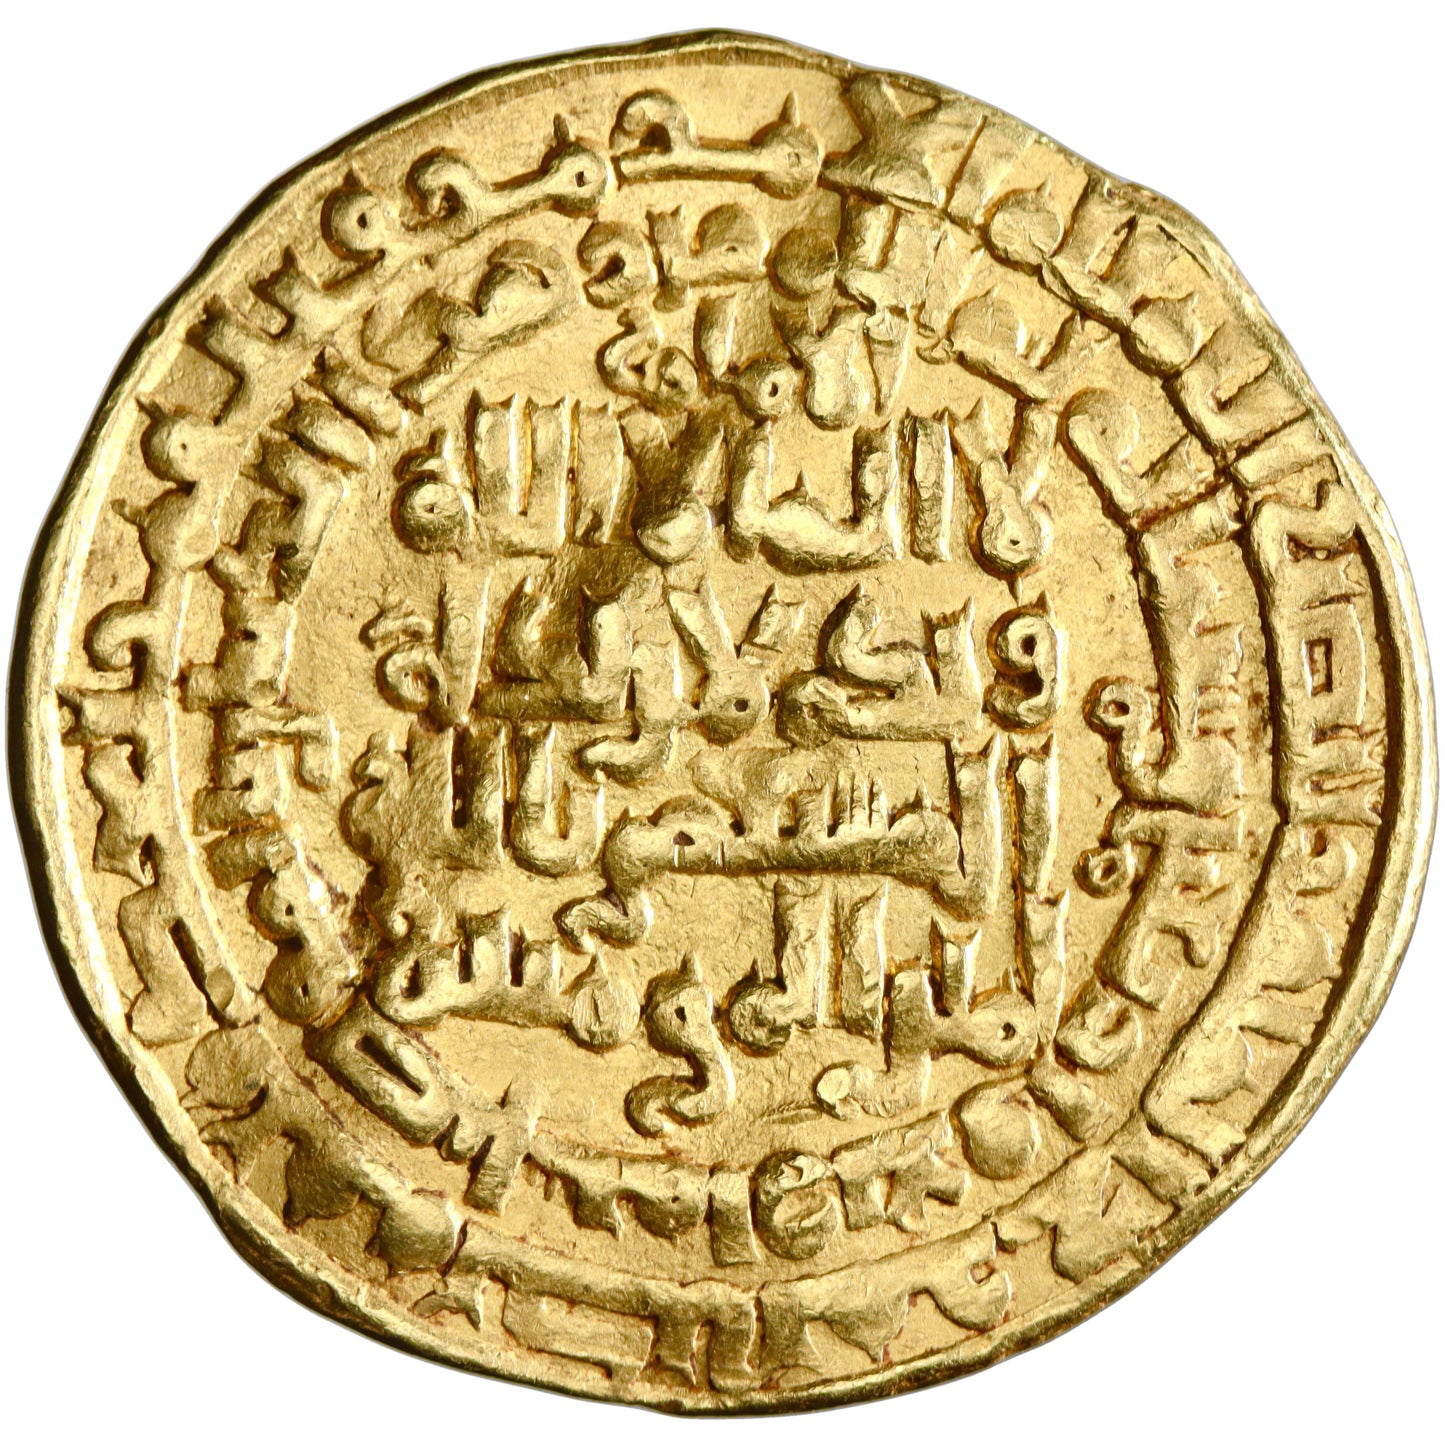 Lu'lu'id, Badr Al-Din Lu'lu', gold heavy dinar, Al-Mawsil (Mosul) mint, AH 644, citing Al-Musta'sim